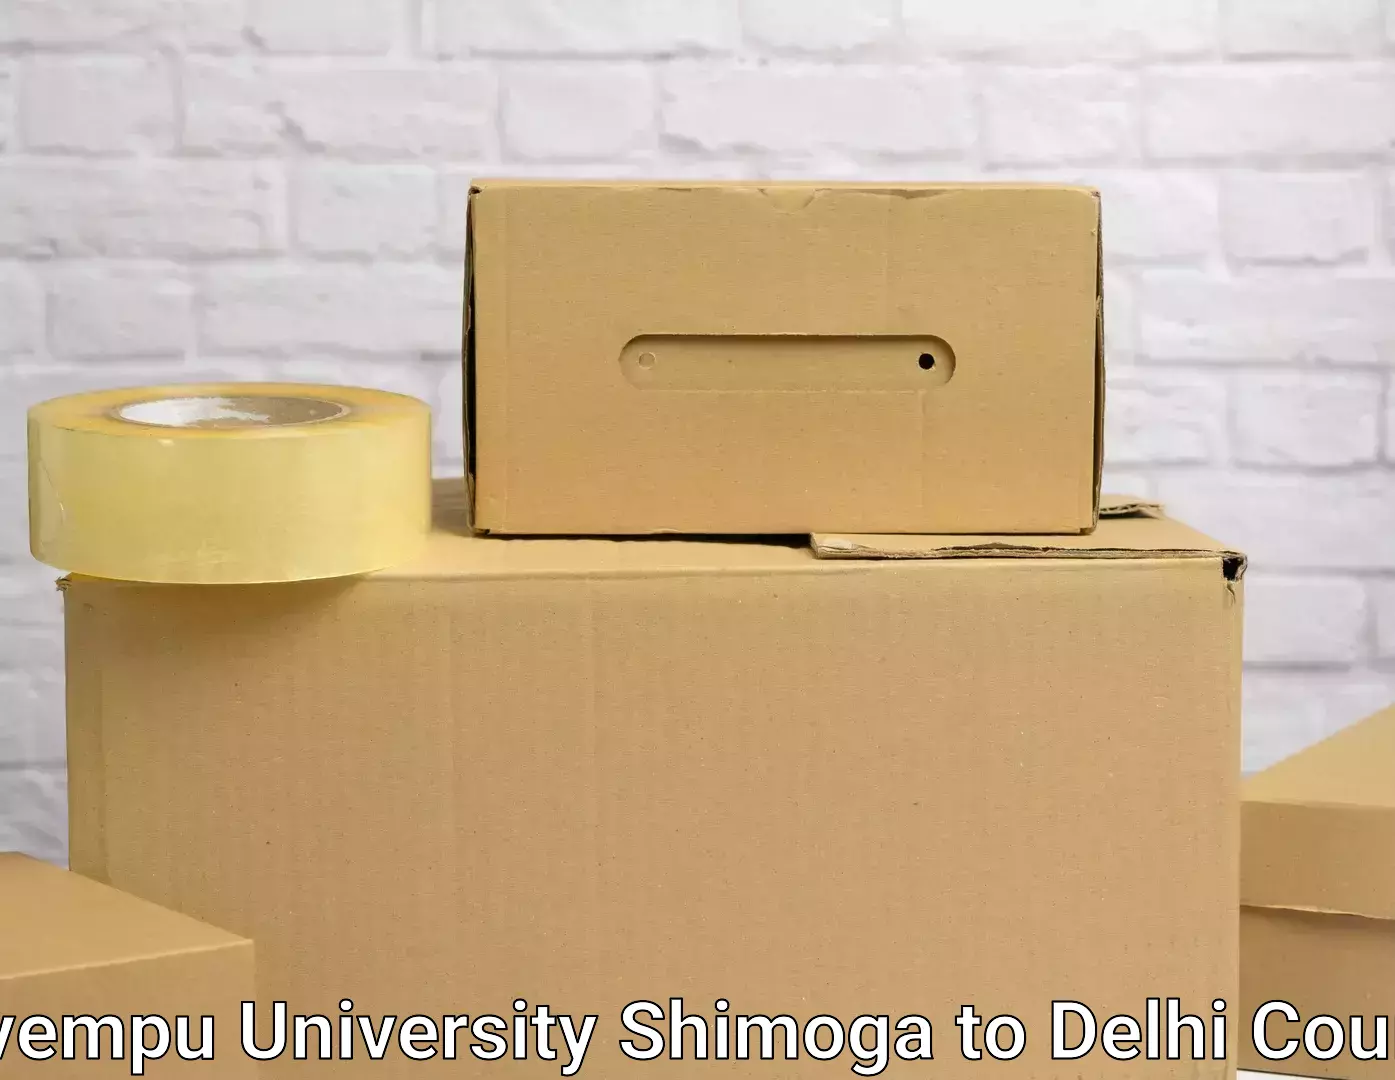 Moving and packing experts Kuvempu University Shimoga to Delhi